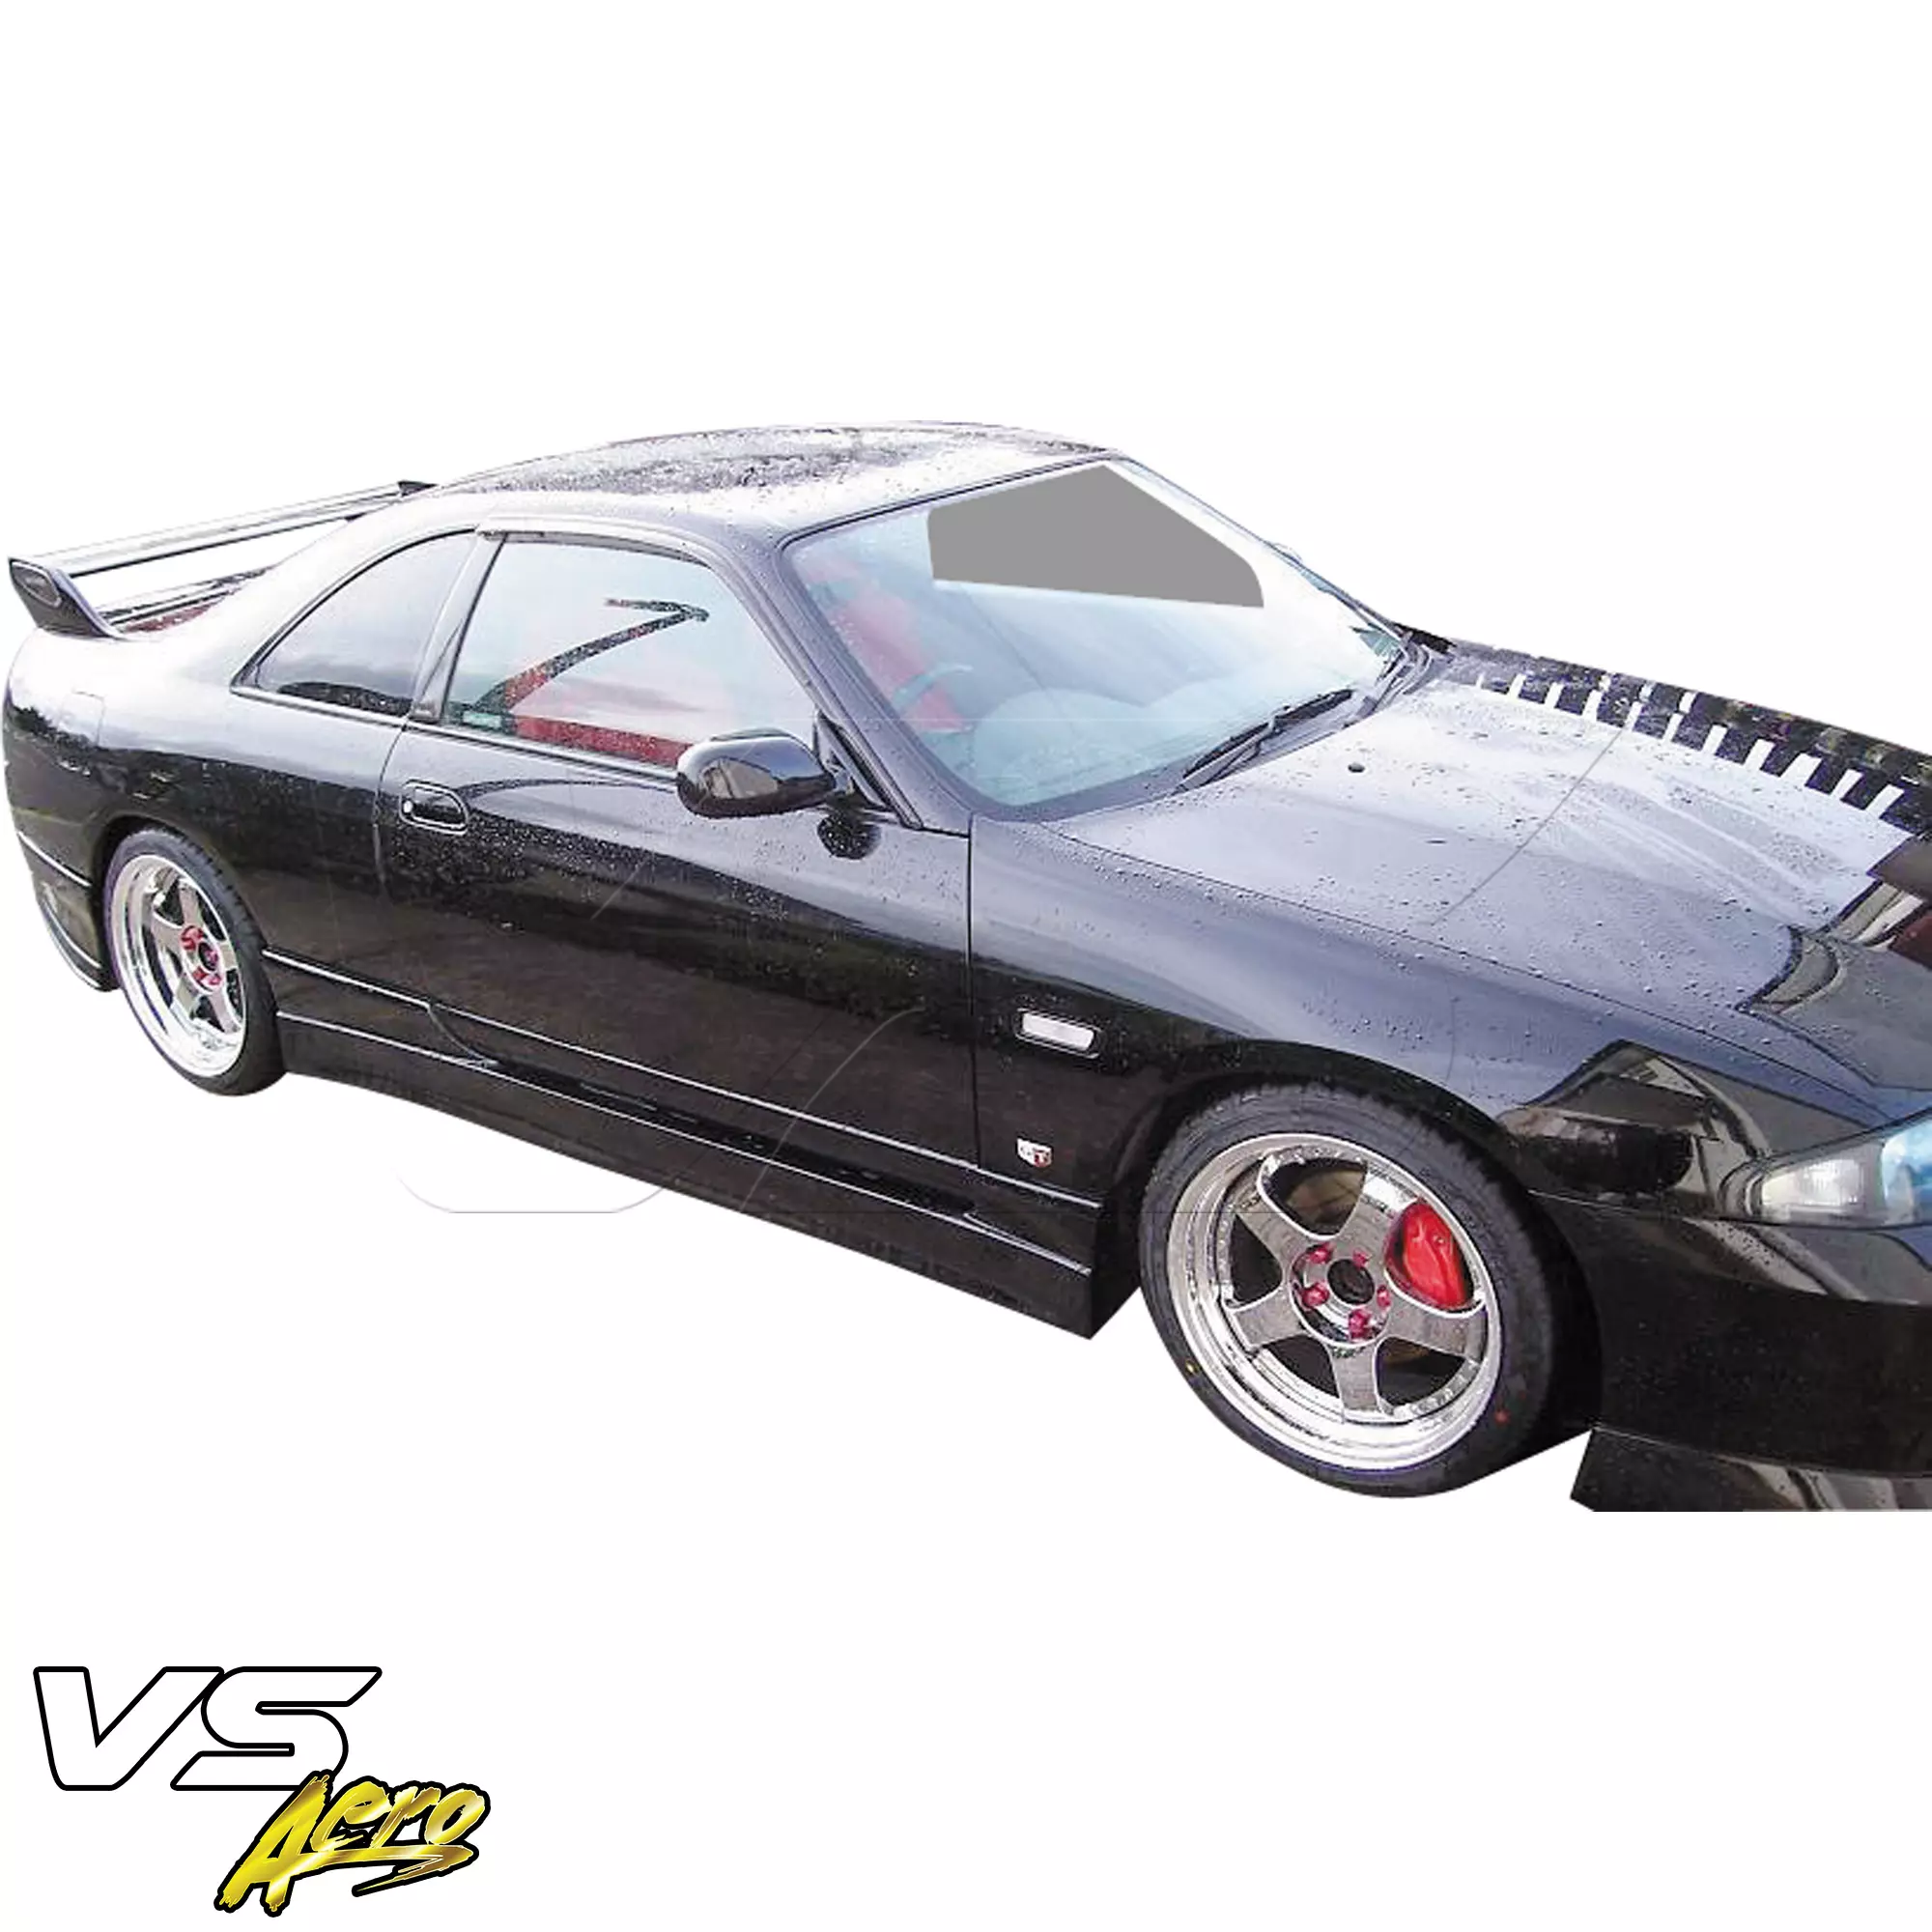 VSaero FRP MSPO v2 Body Kit 4pc > Nissan Skyline R33 GTS 1995-1998 > 2dr Coupe - Image 29